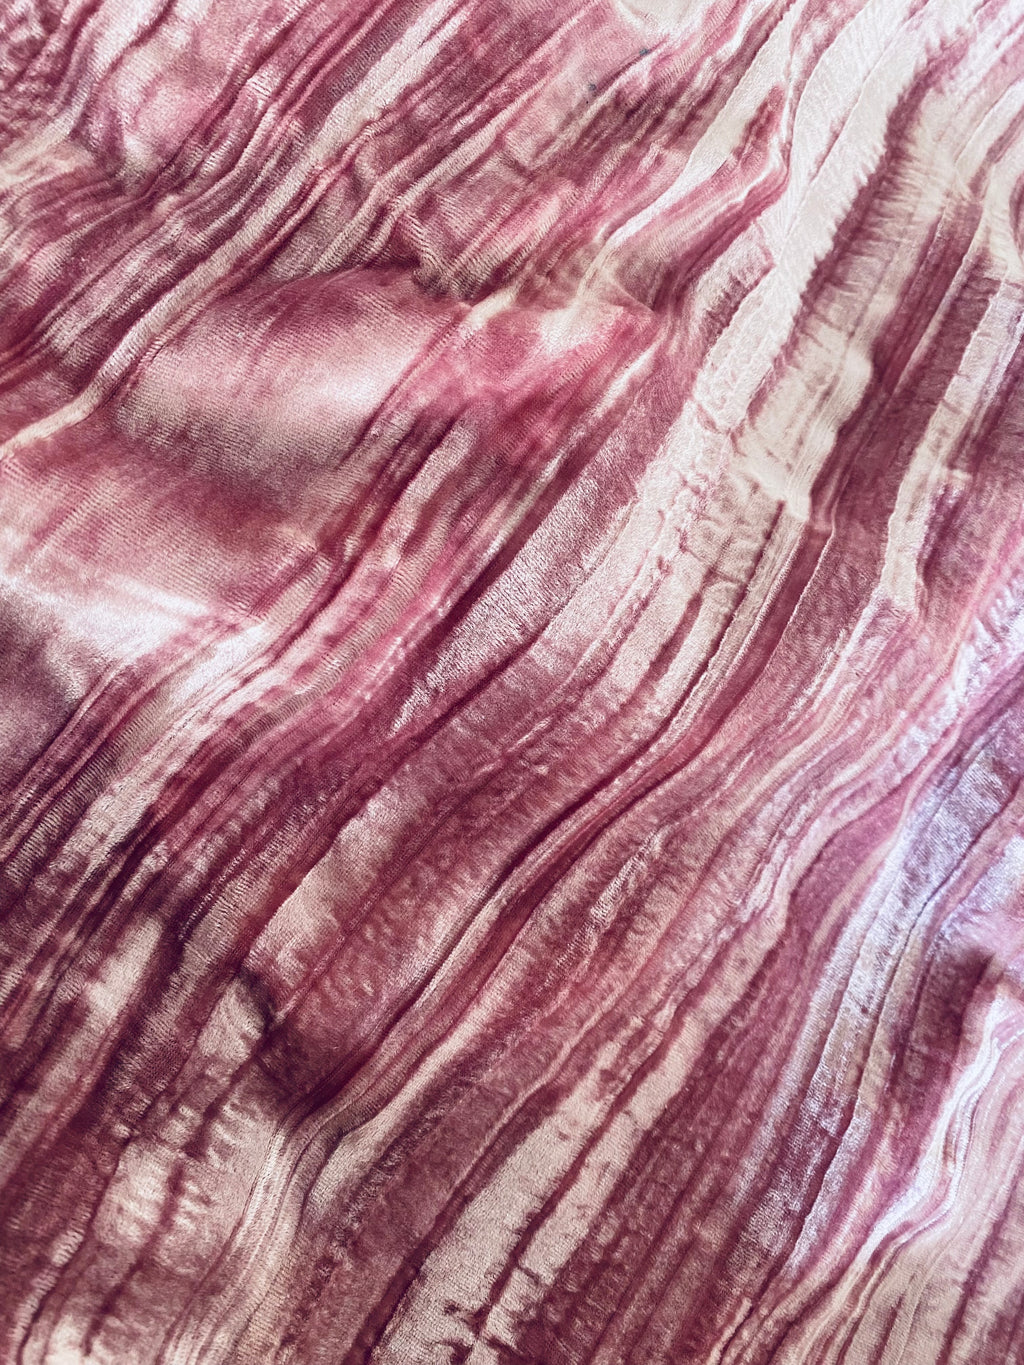 NEW! Prince Jeffrey Red Silk Poly Velvet Fabric